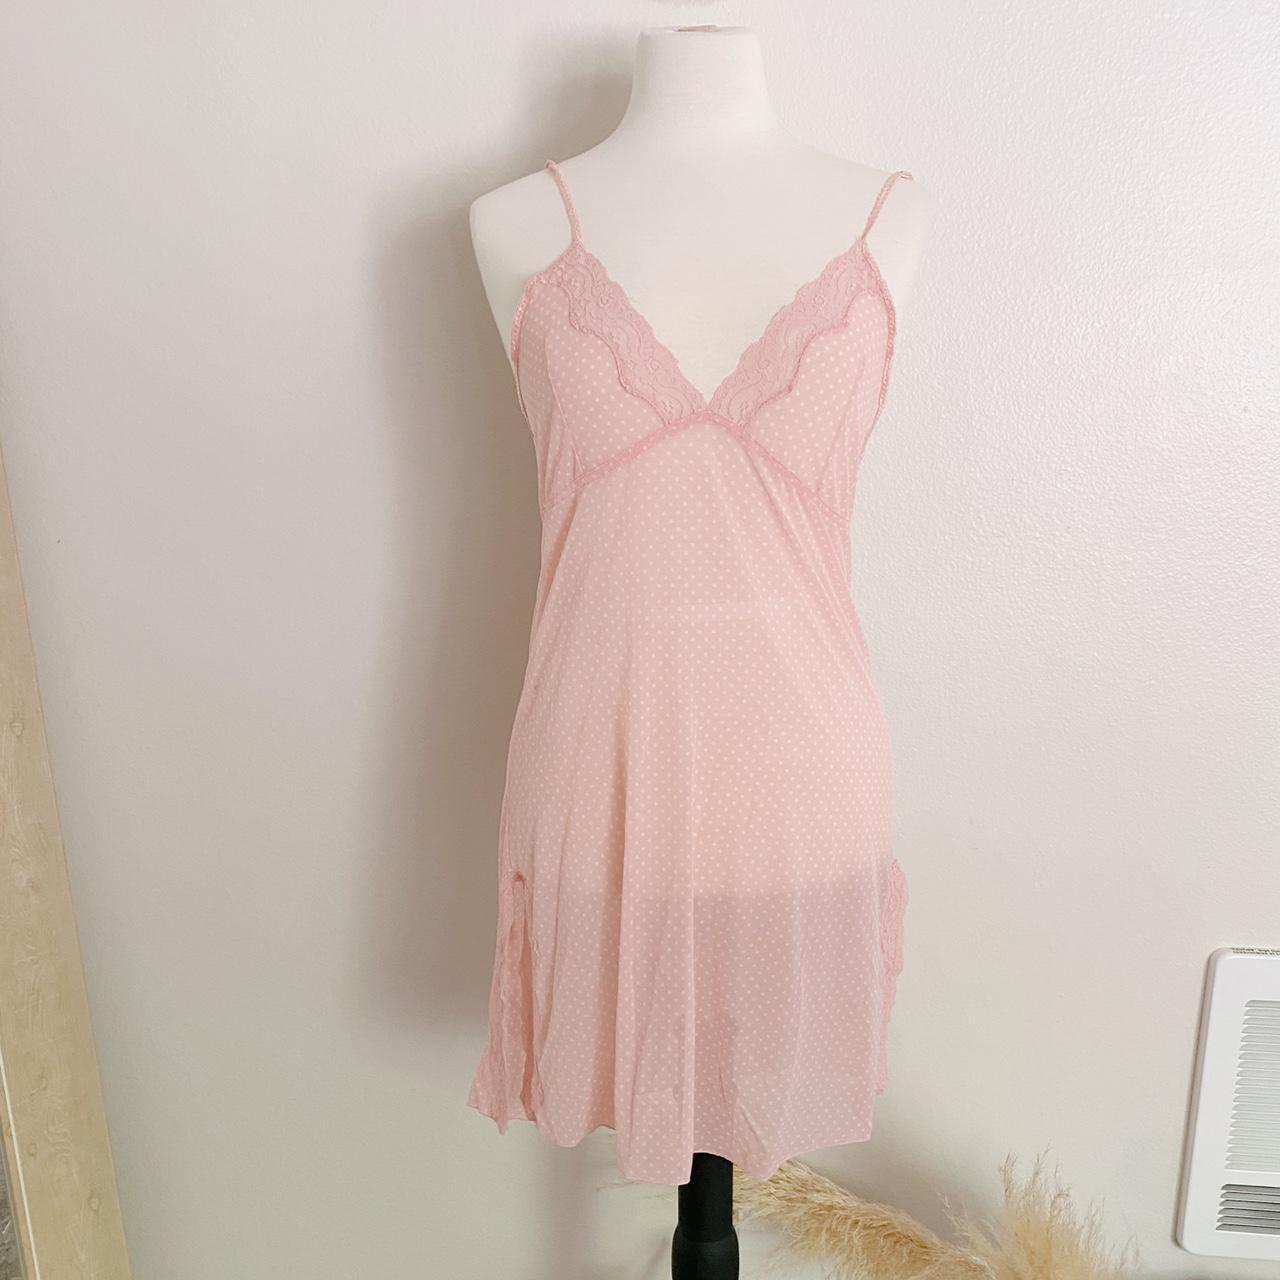 Product Image 1 - Rampage baby pink slip dress

Super